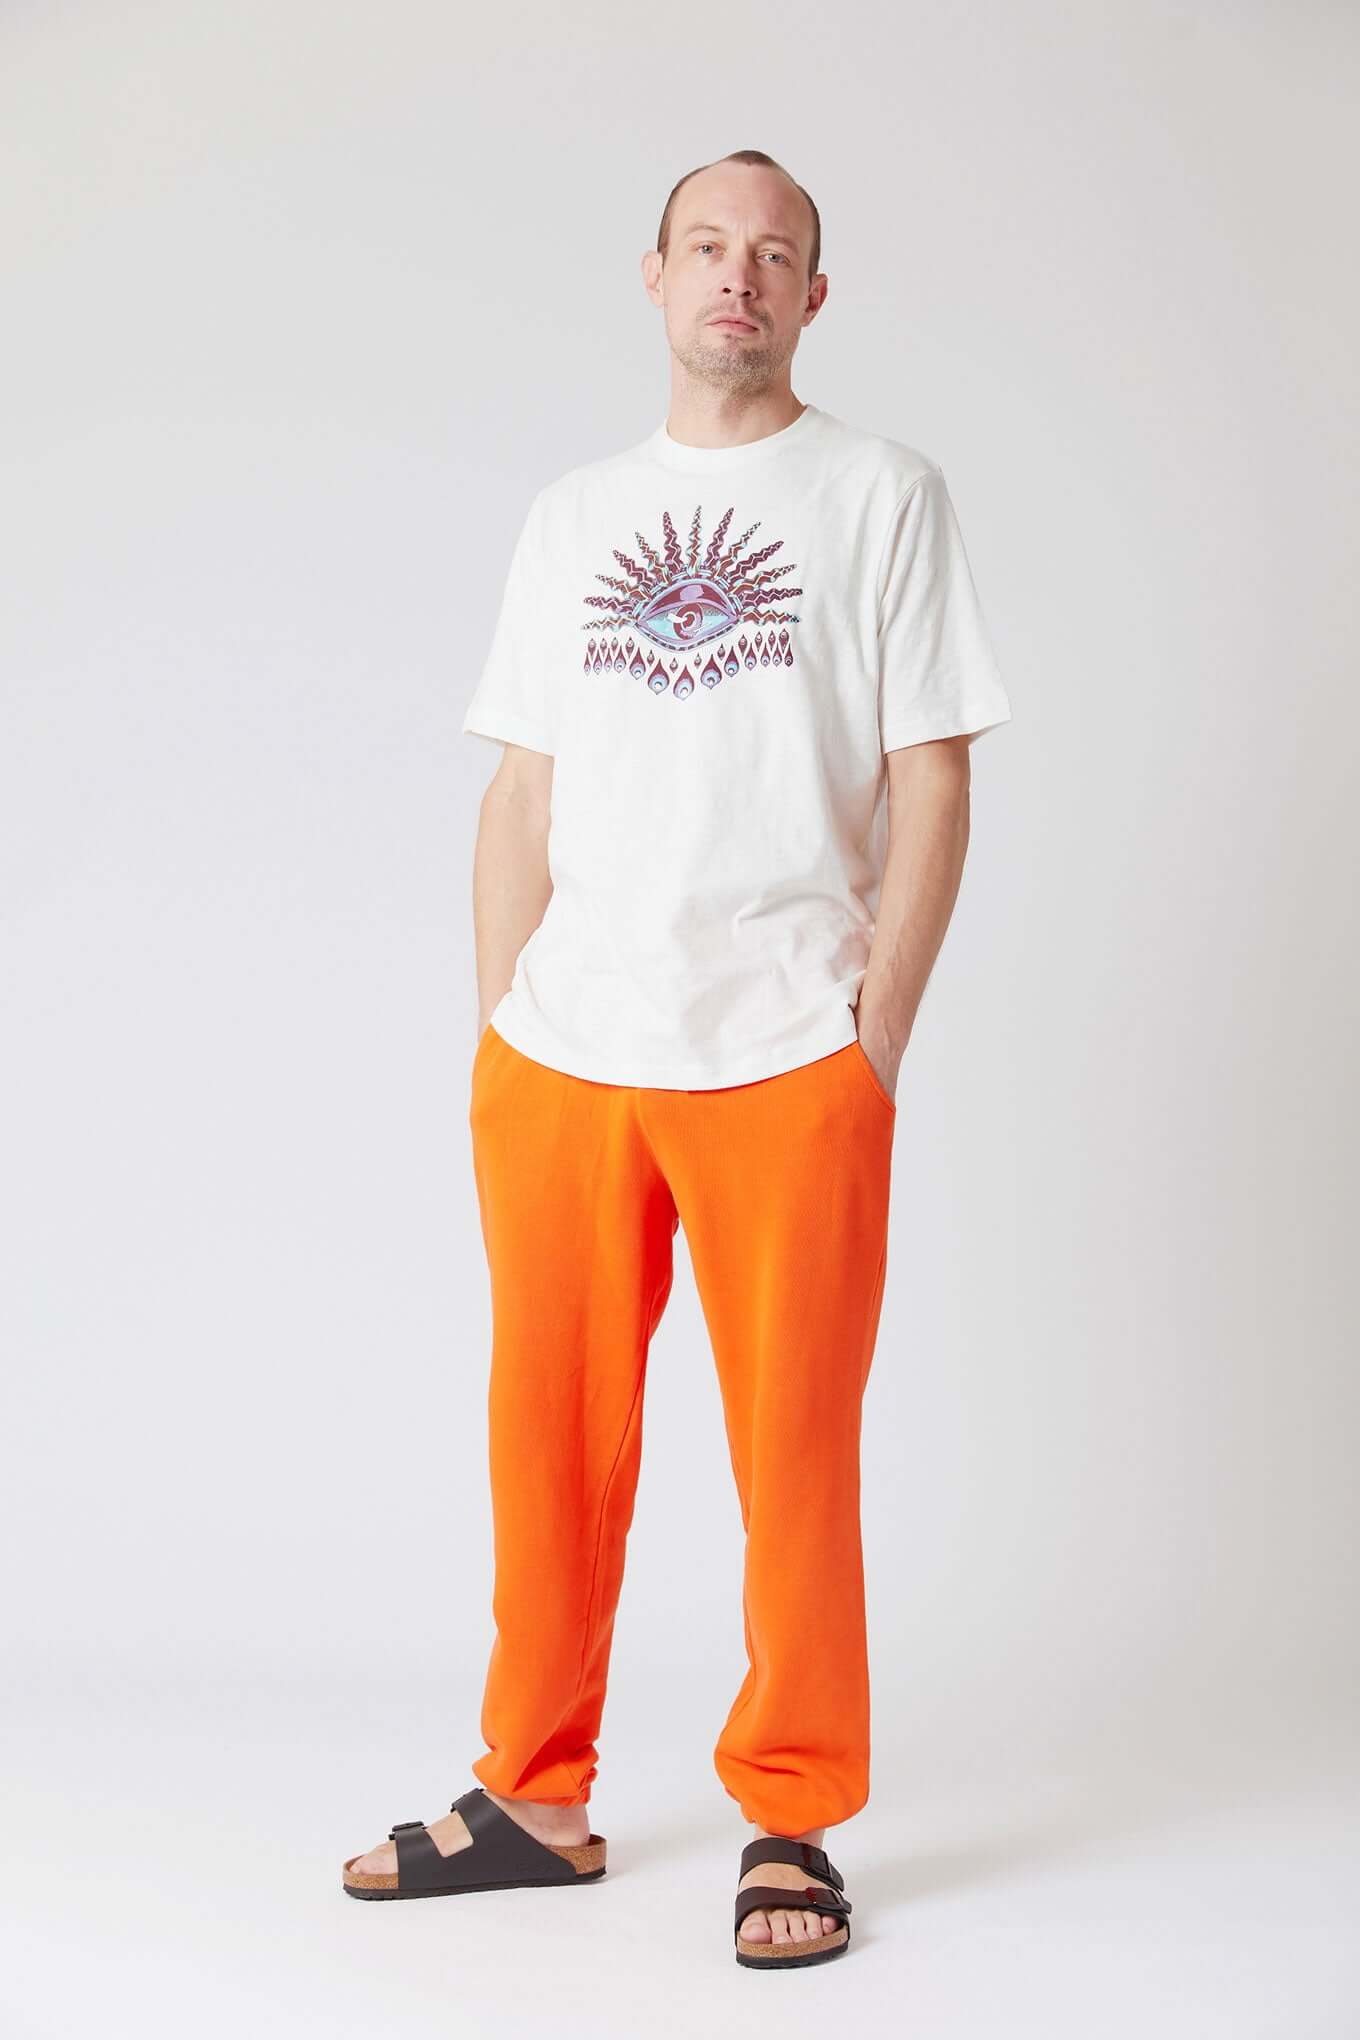 Trousers - ADAM Men's - GOTS Organic Cotton Traksuit Orange